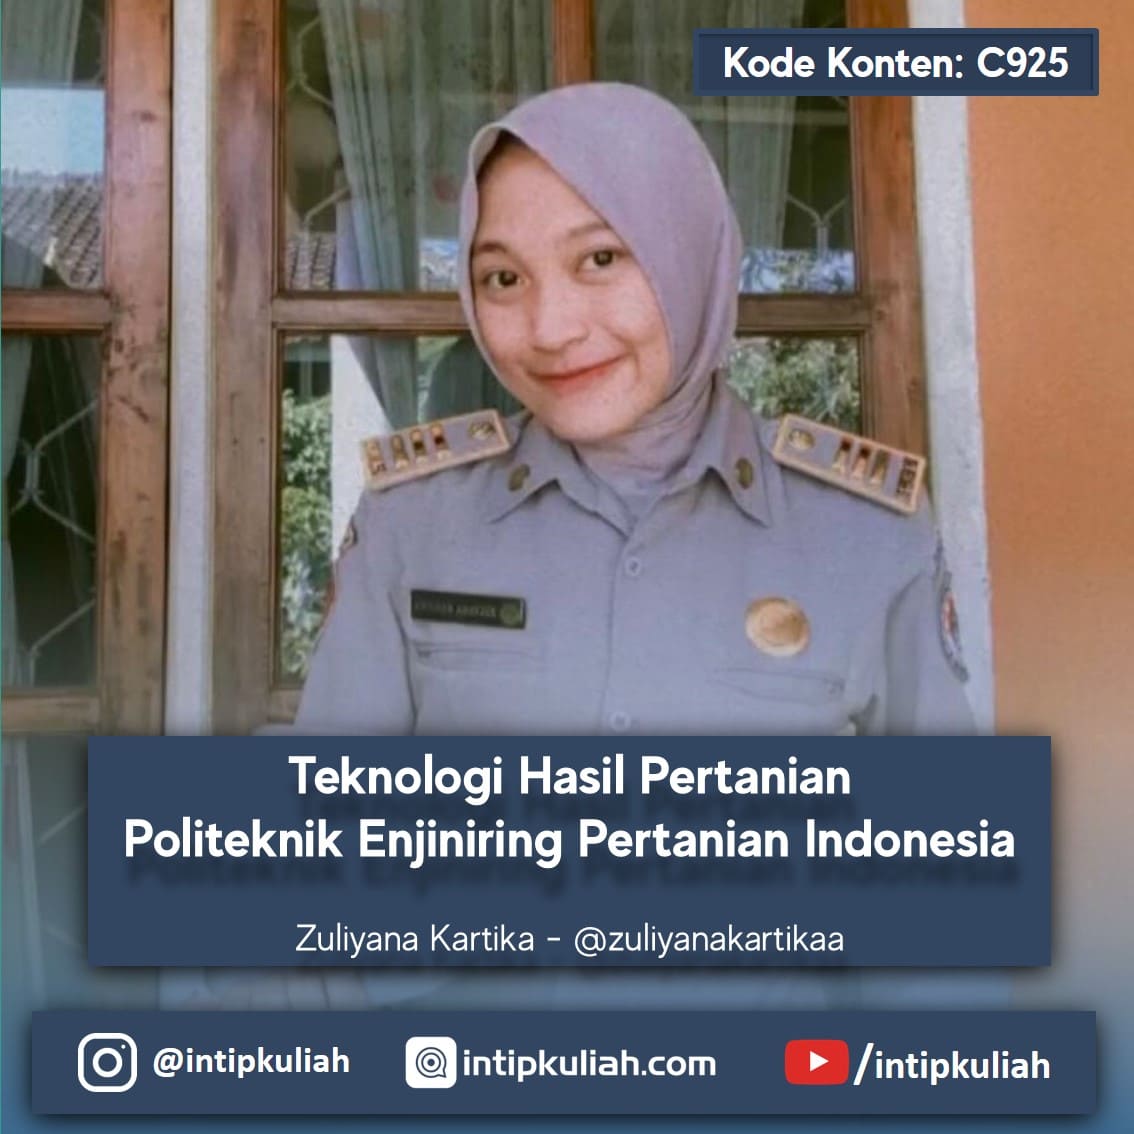 Teknologi Hasil Pertanian Politeknik Enjiniring Pertanian Indonesia (Zuliyana)